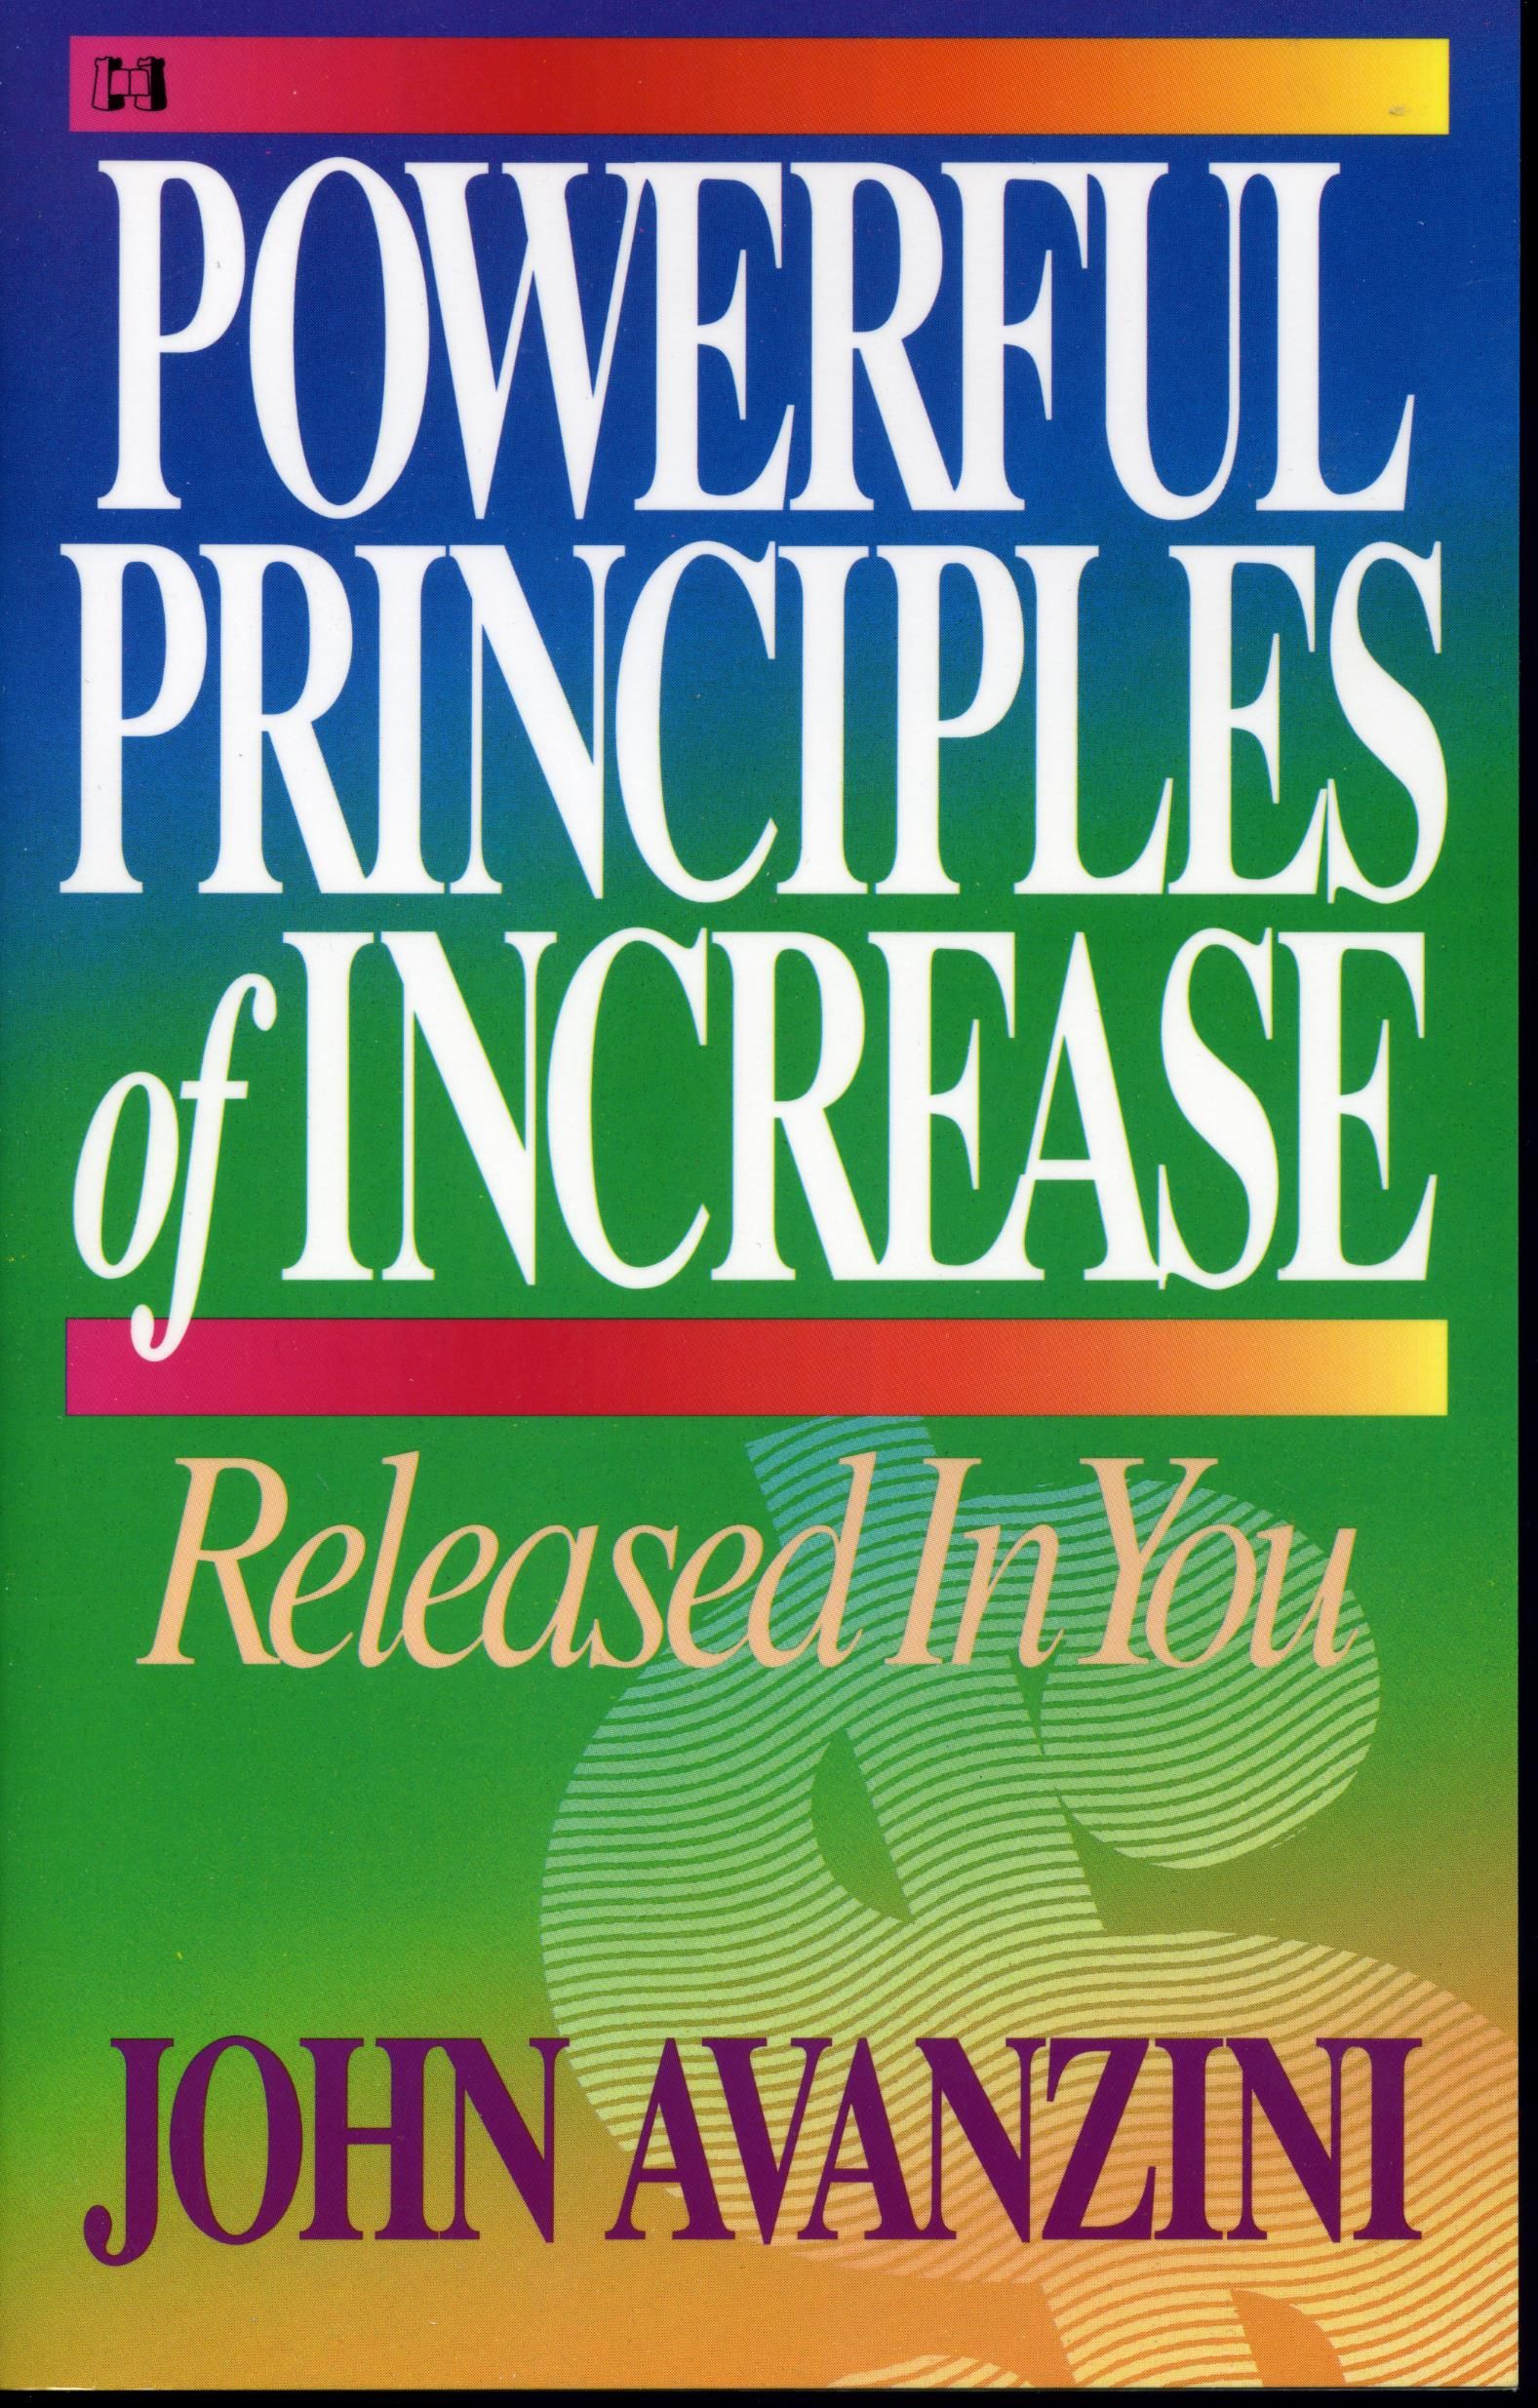 John Avanzini: Powerful Principles of Increase